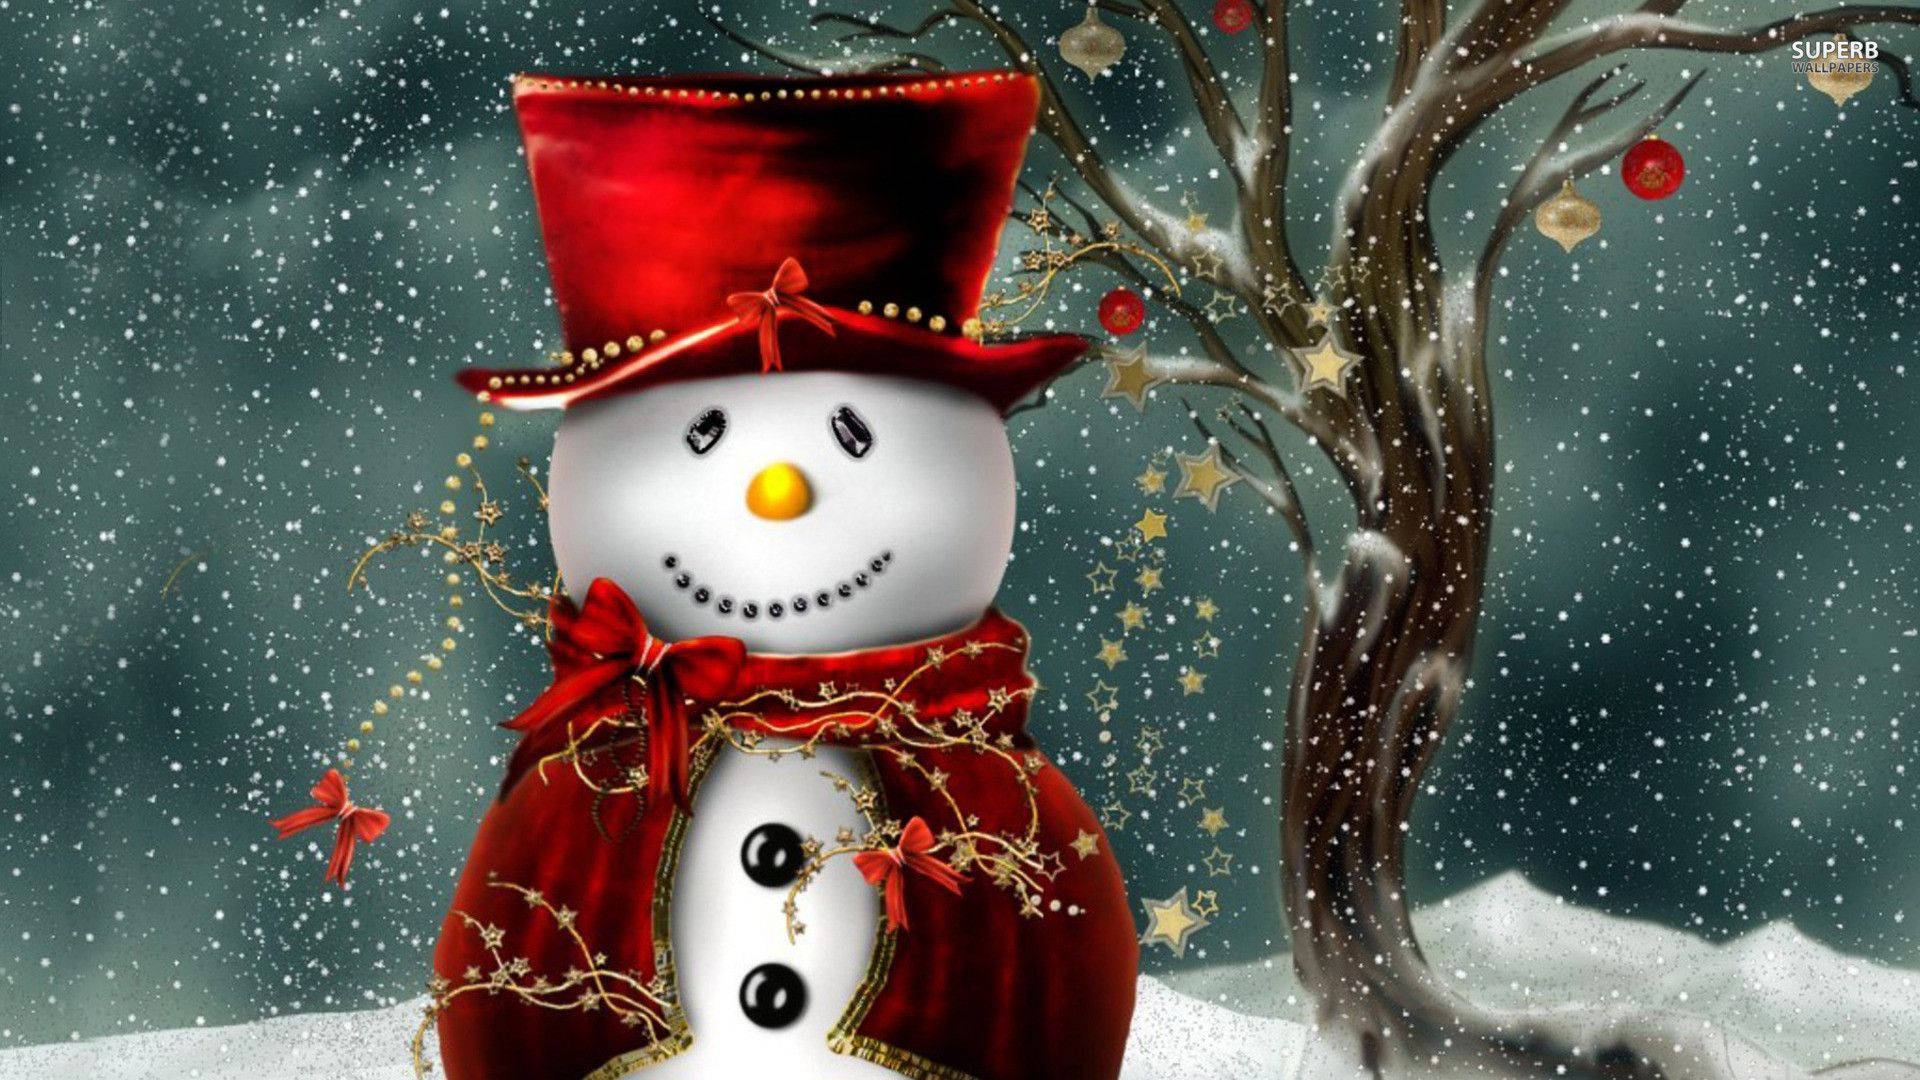 Premium AI Image | PC winter snow season snowman 3d model Christmas snowman  wallpaper illustration background